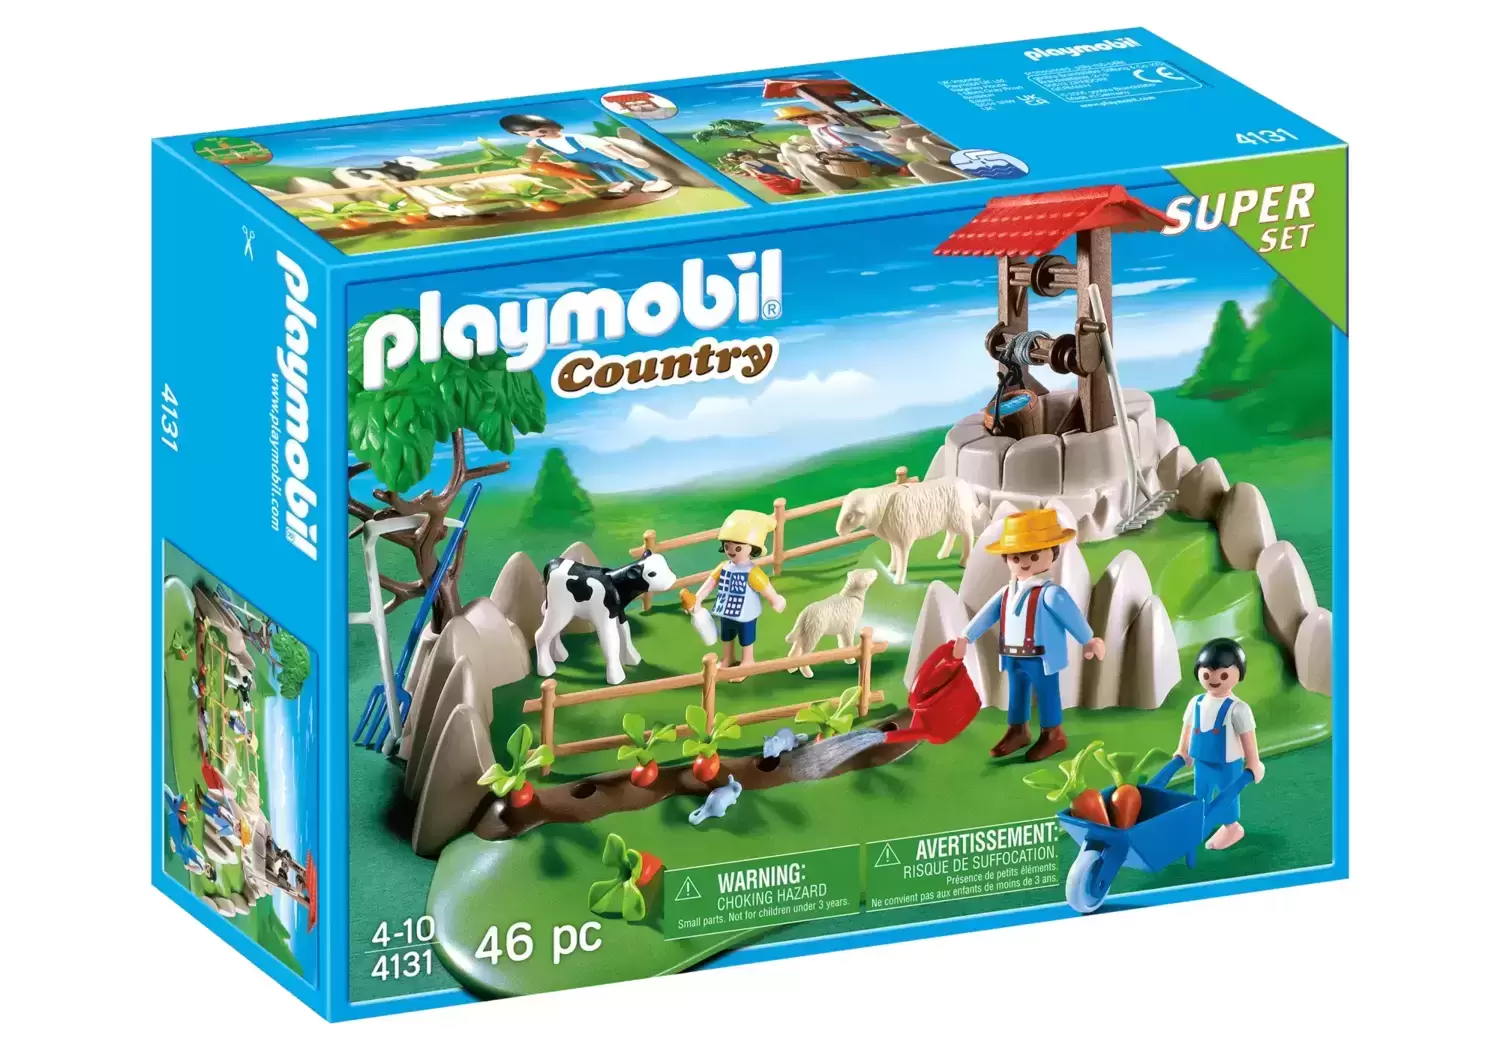 Playmobil Farmers - Playmobil Country Super Set